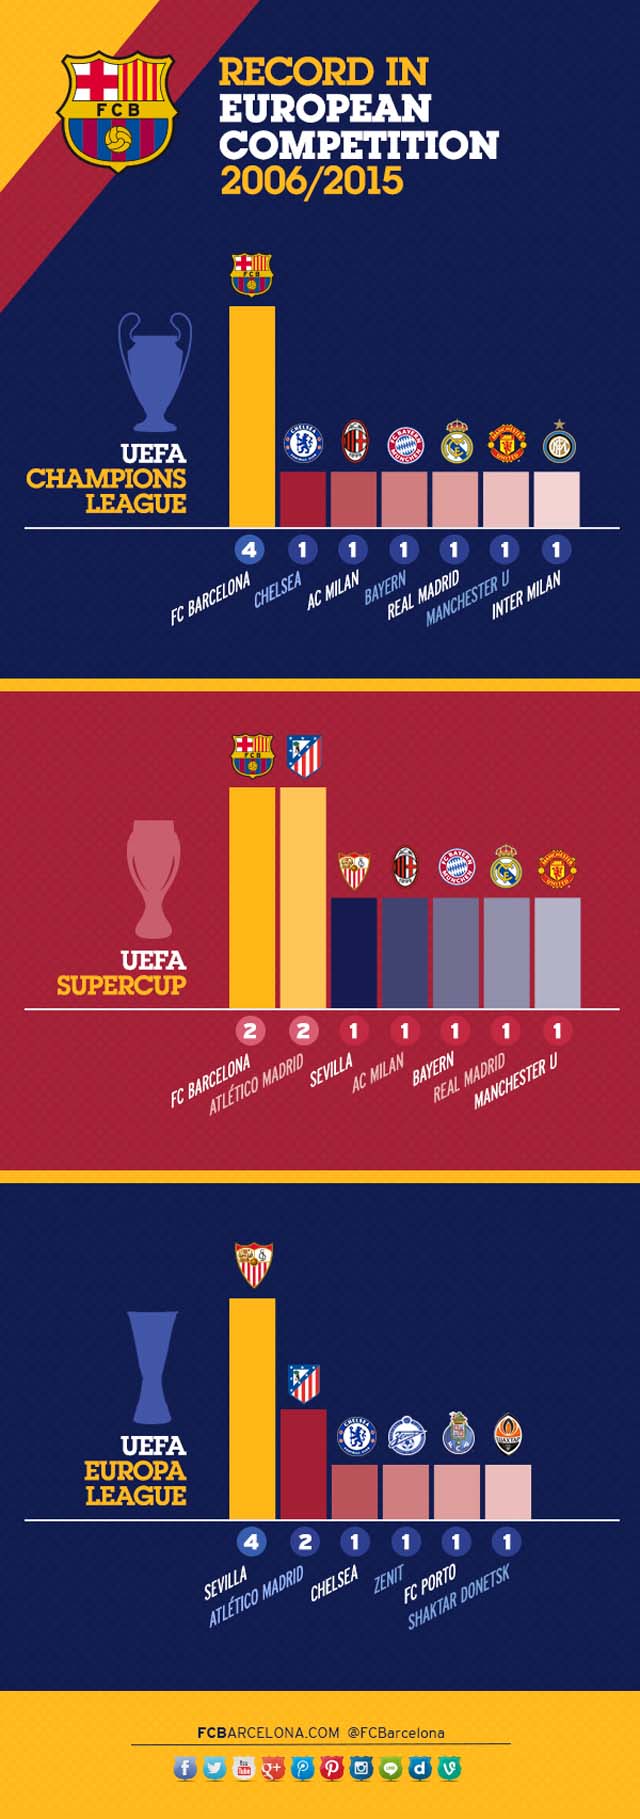 Барселона доминирует в Европе за последнее десятилетие